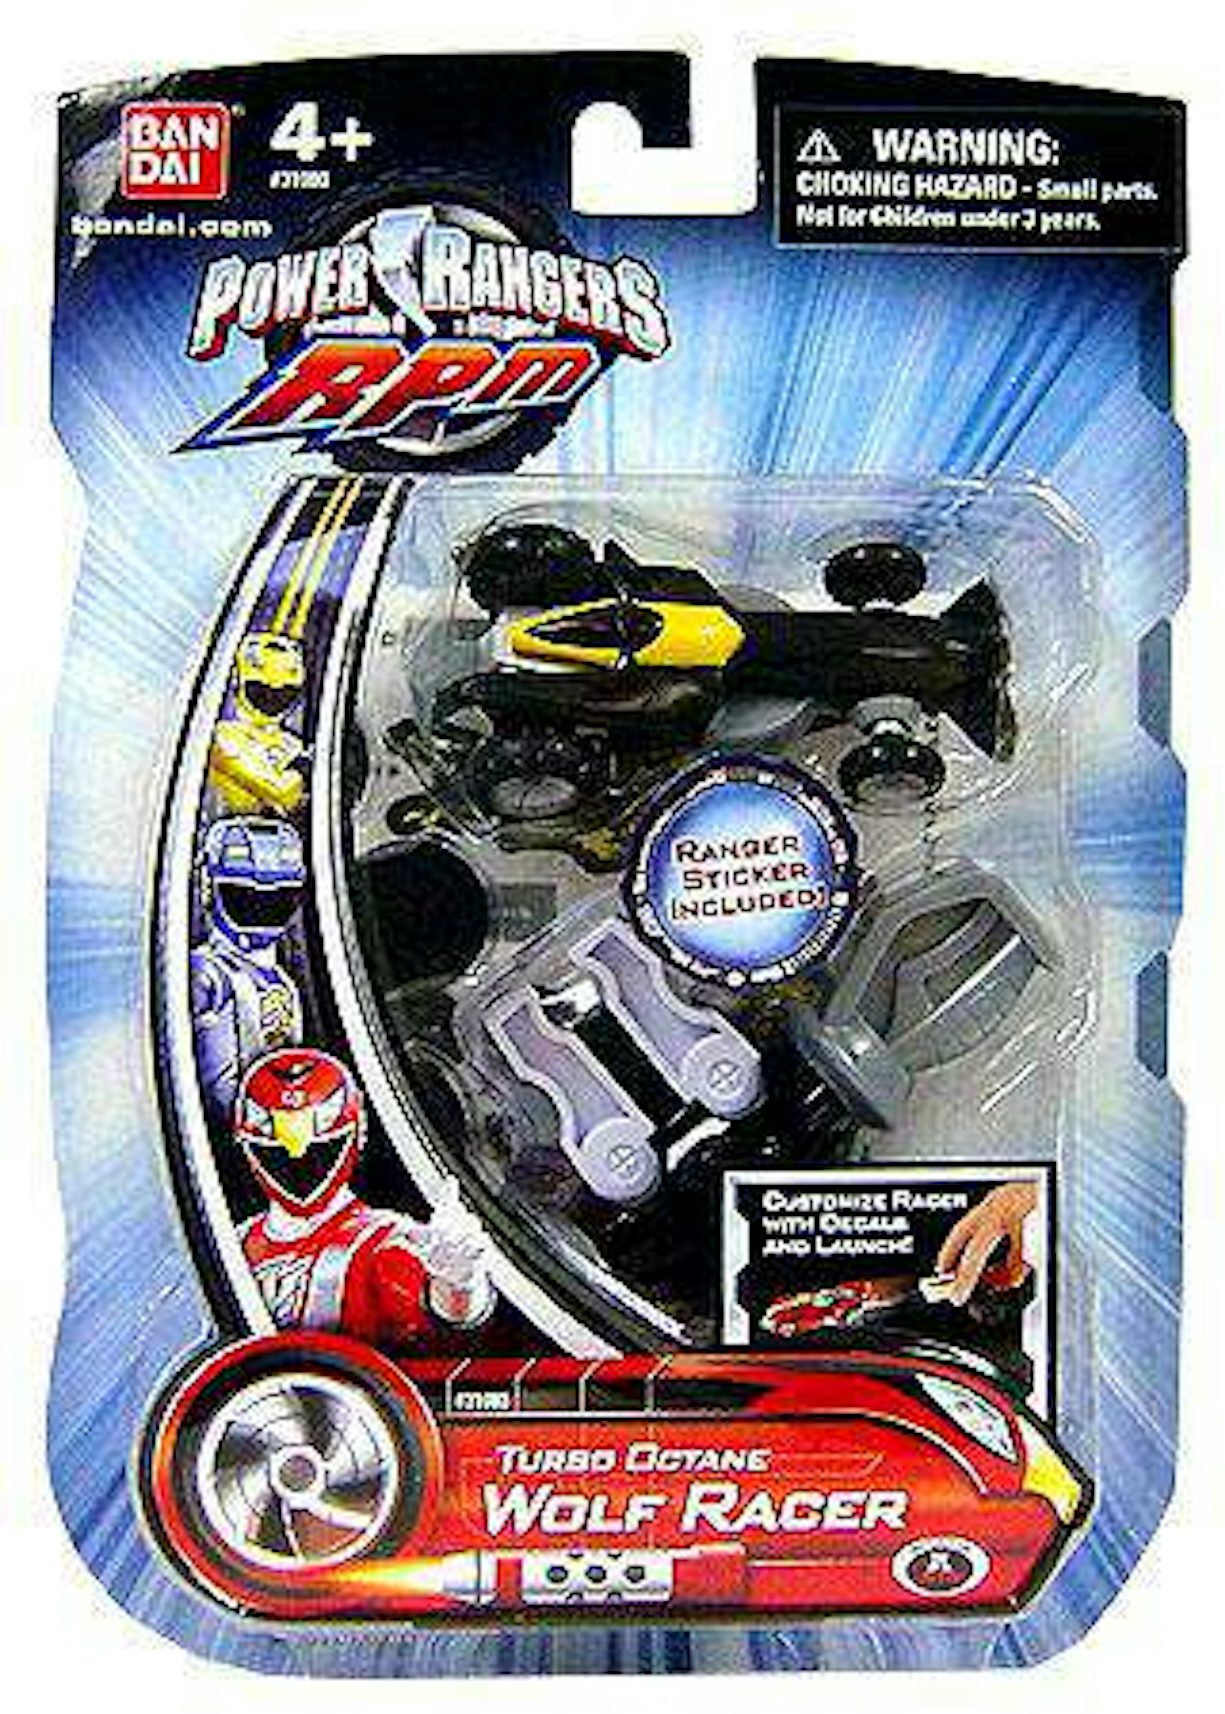 power rangers rpm toys